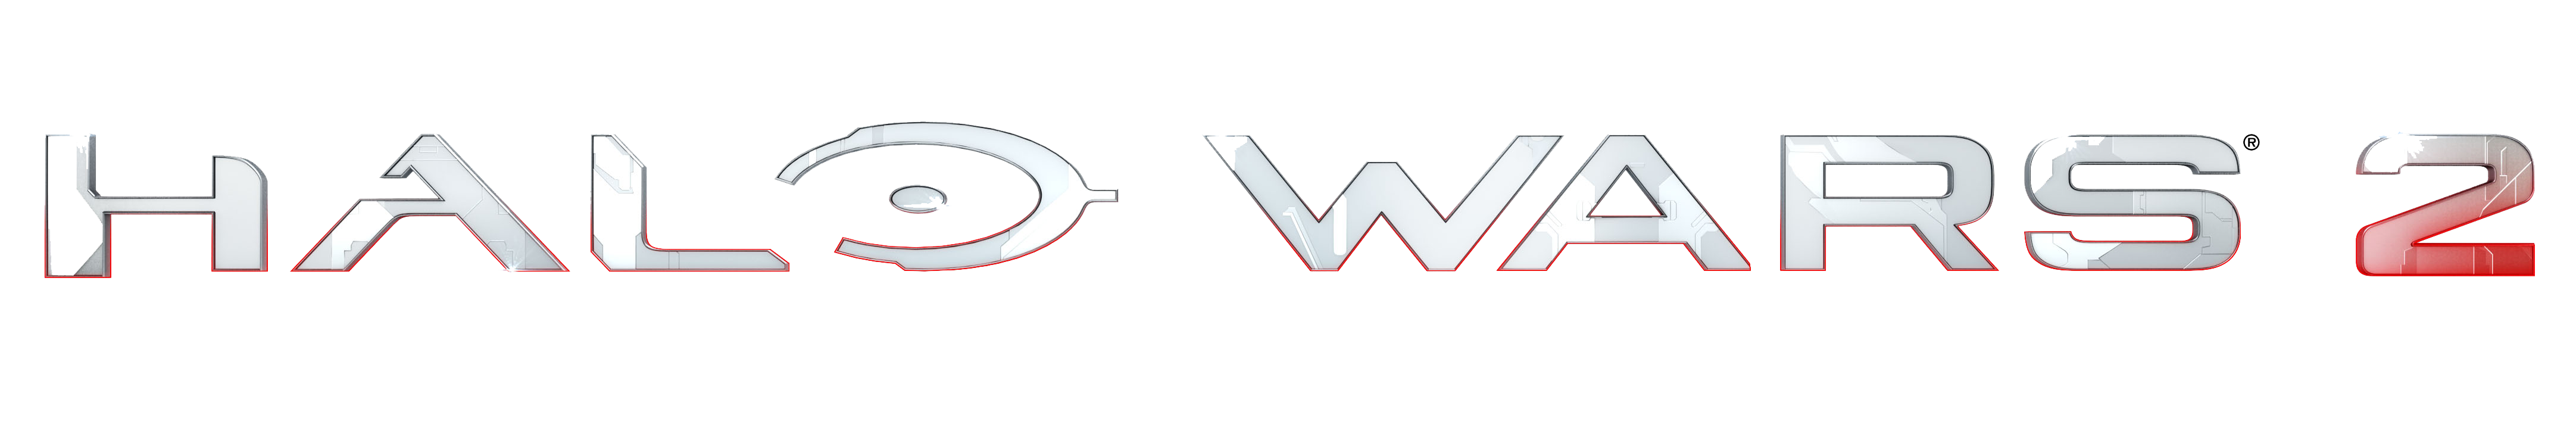 Logo Learning Wars Ring Battle PNG